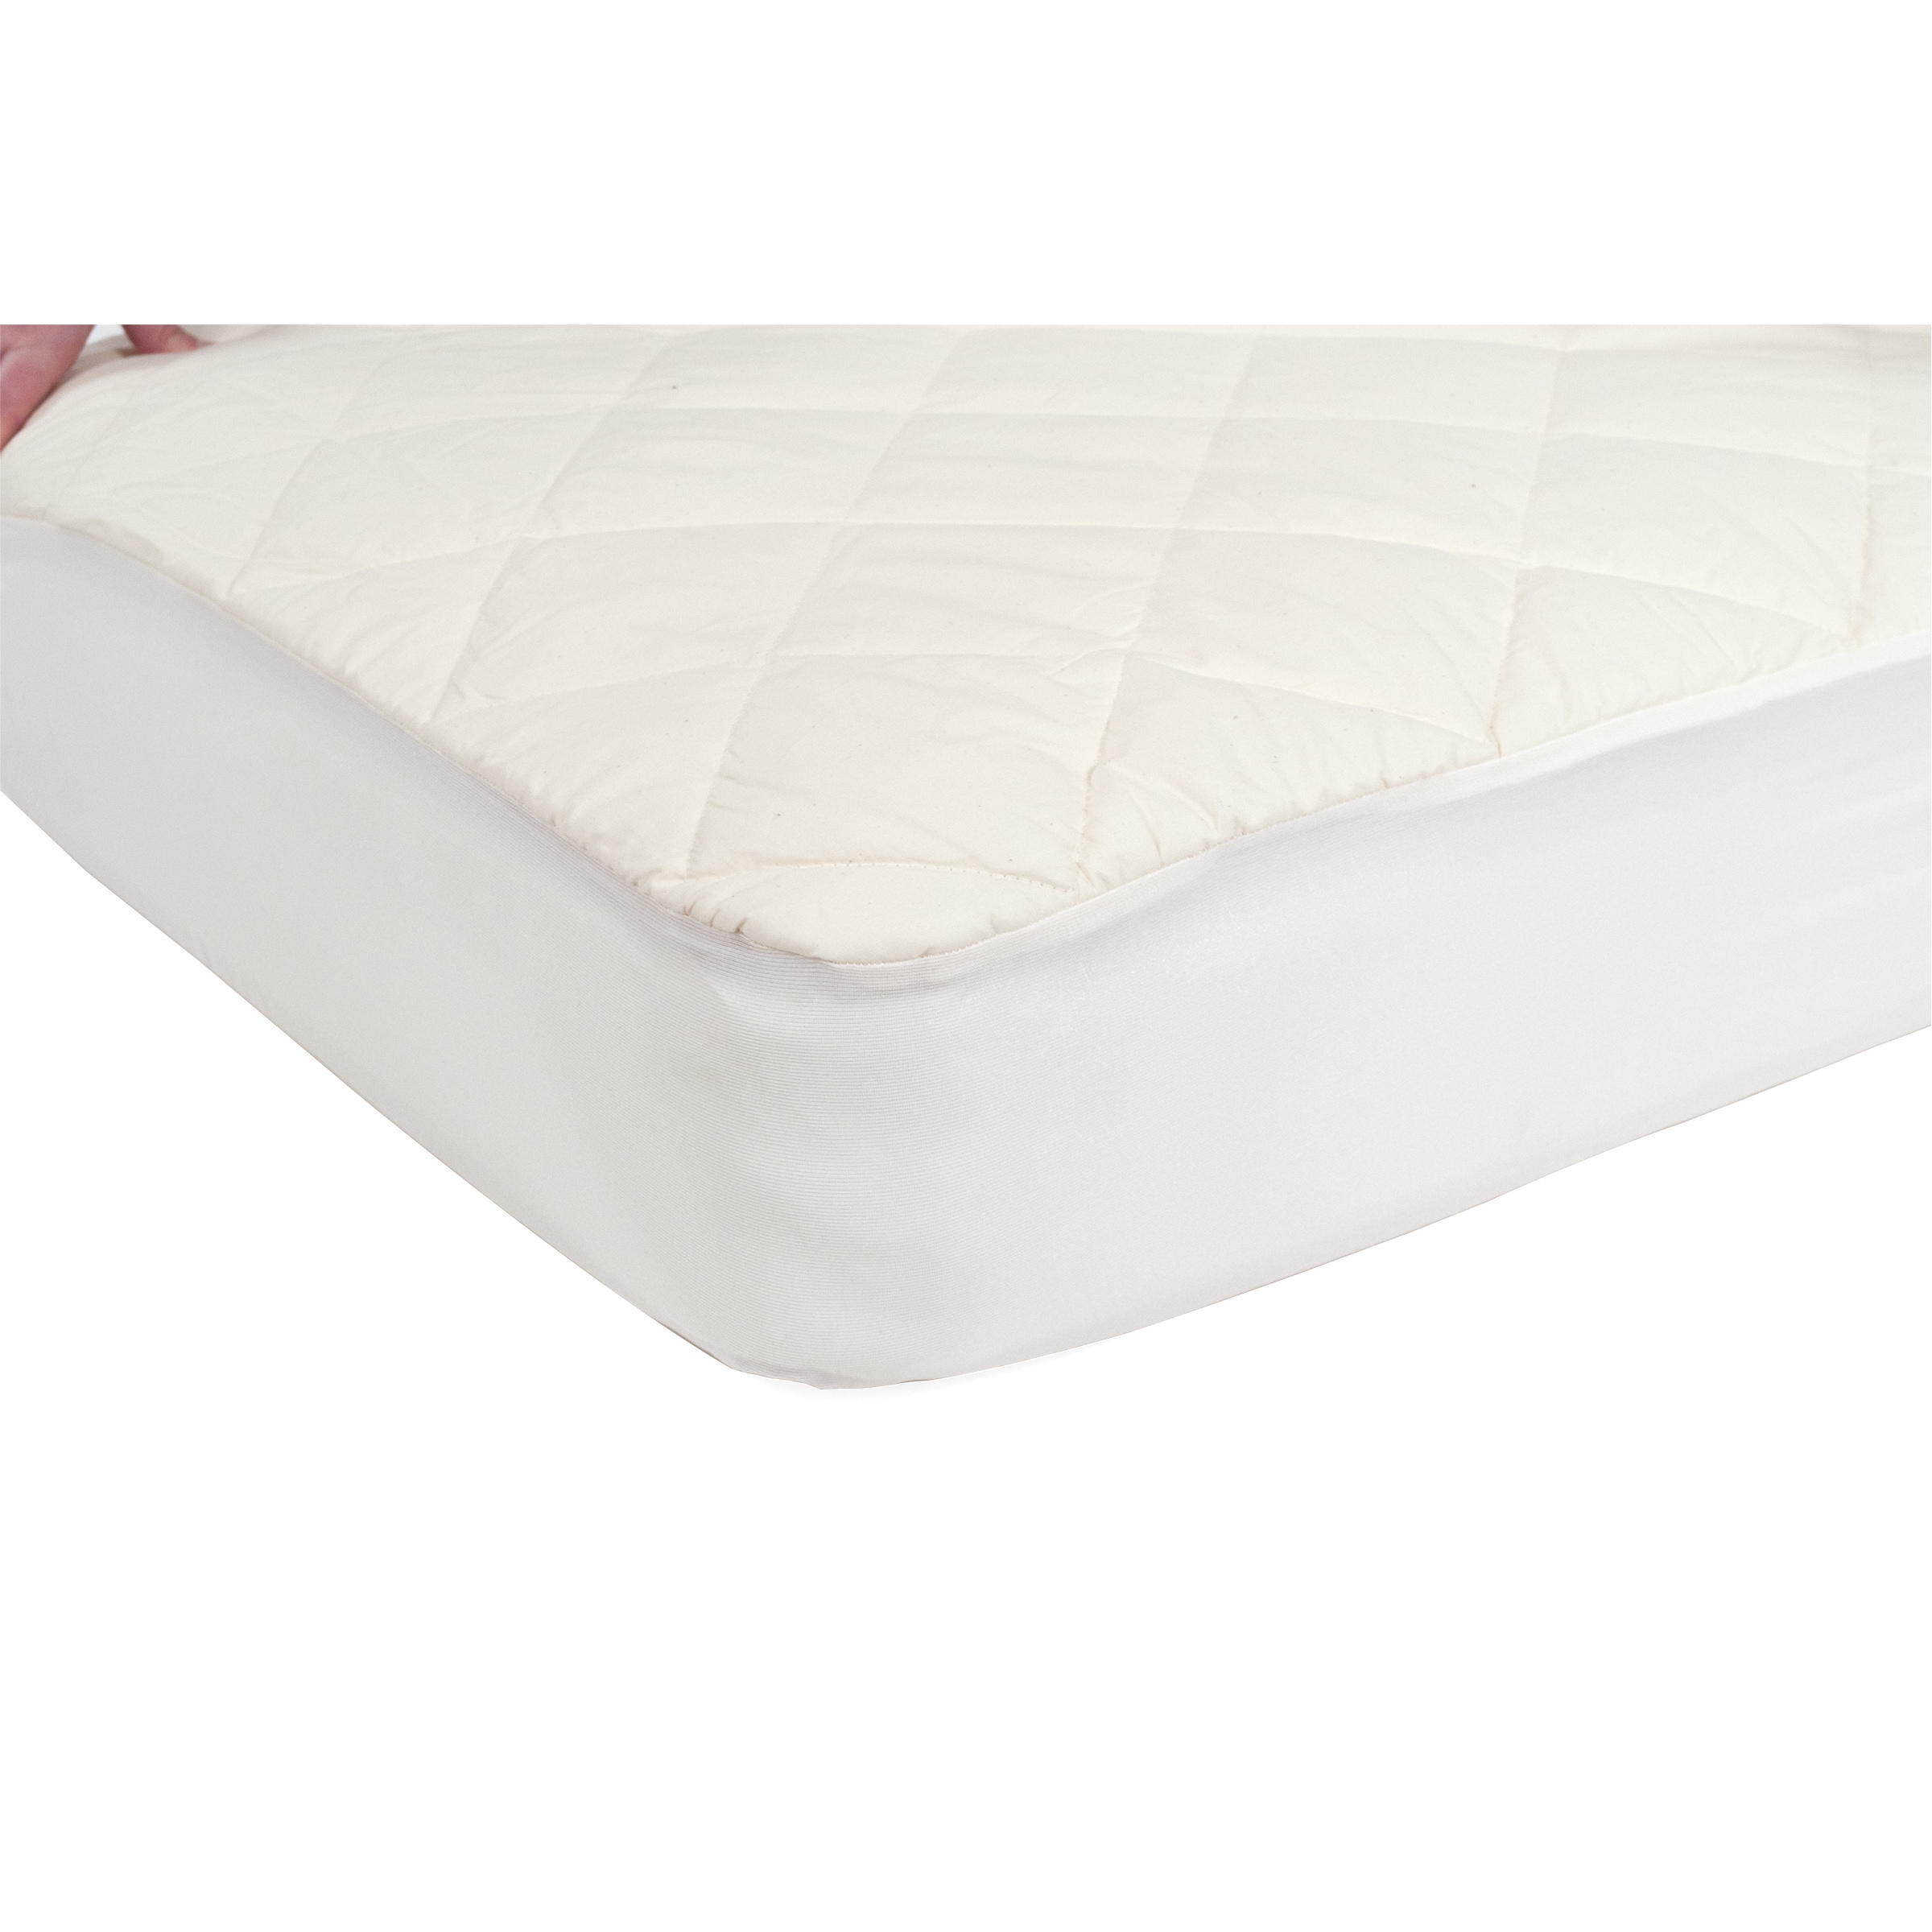 comfortable crib mattress pad